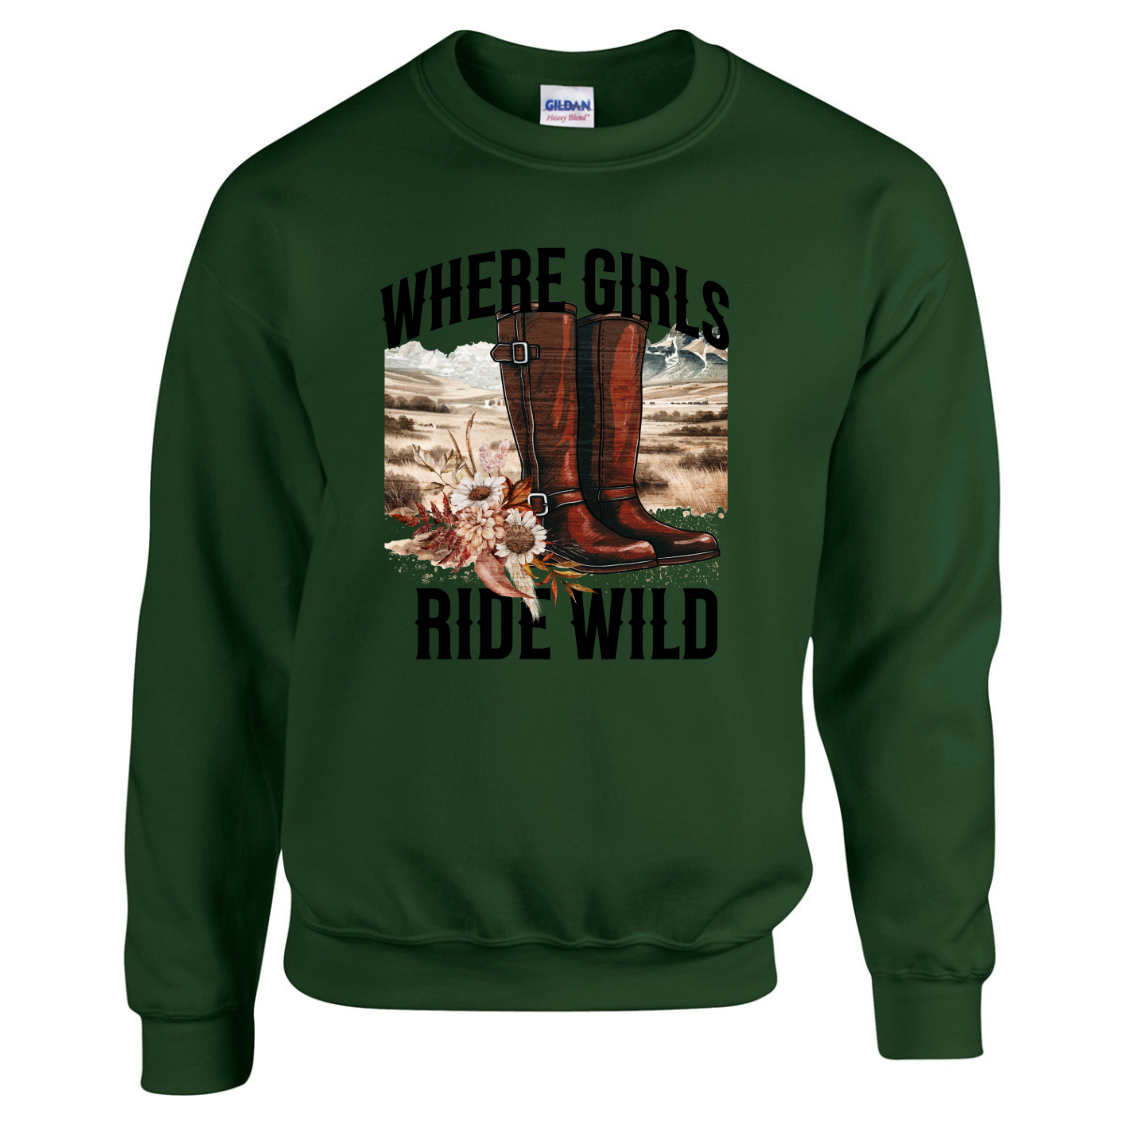 Where Girls Ride Wild: Unleash Your Inner Maverick in This Comfy Sweatshirt